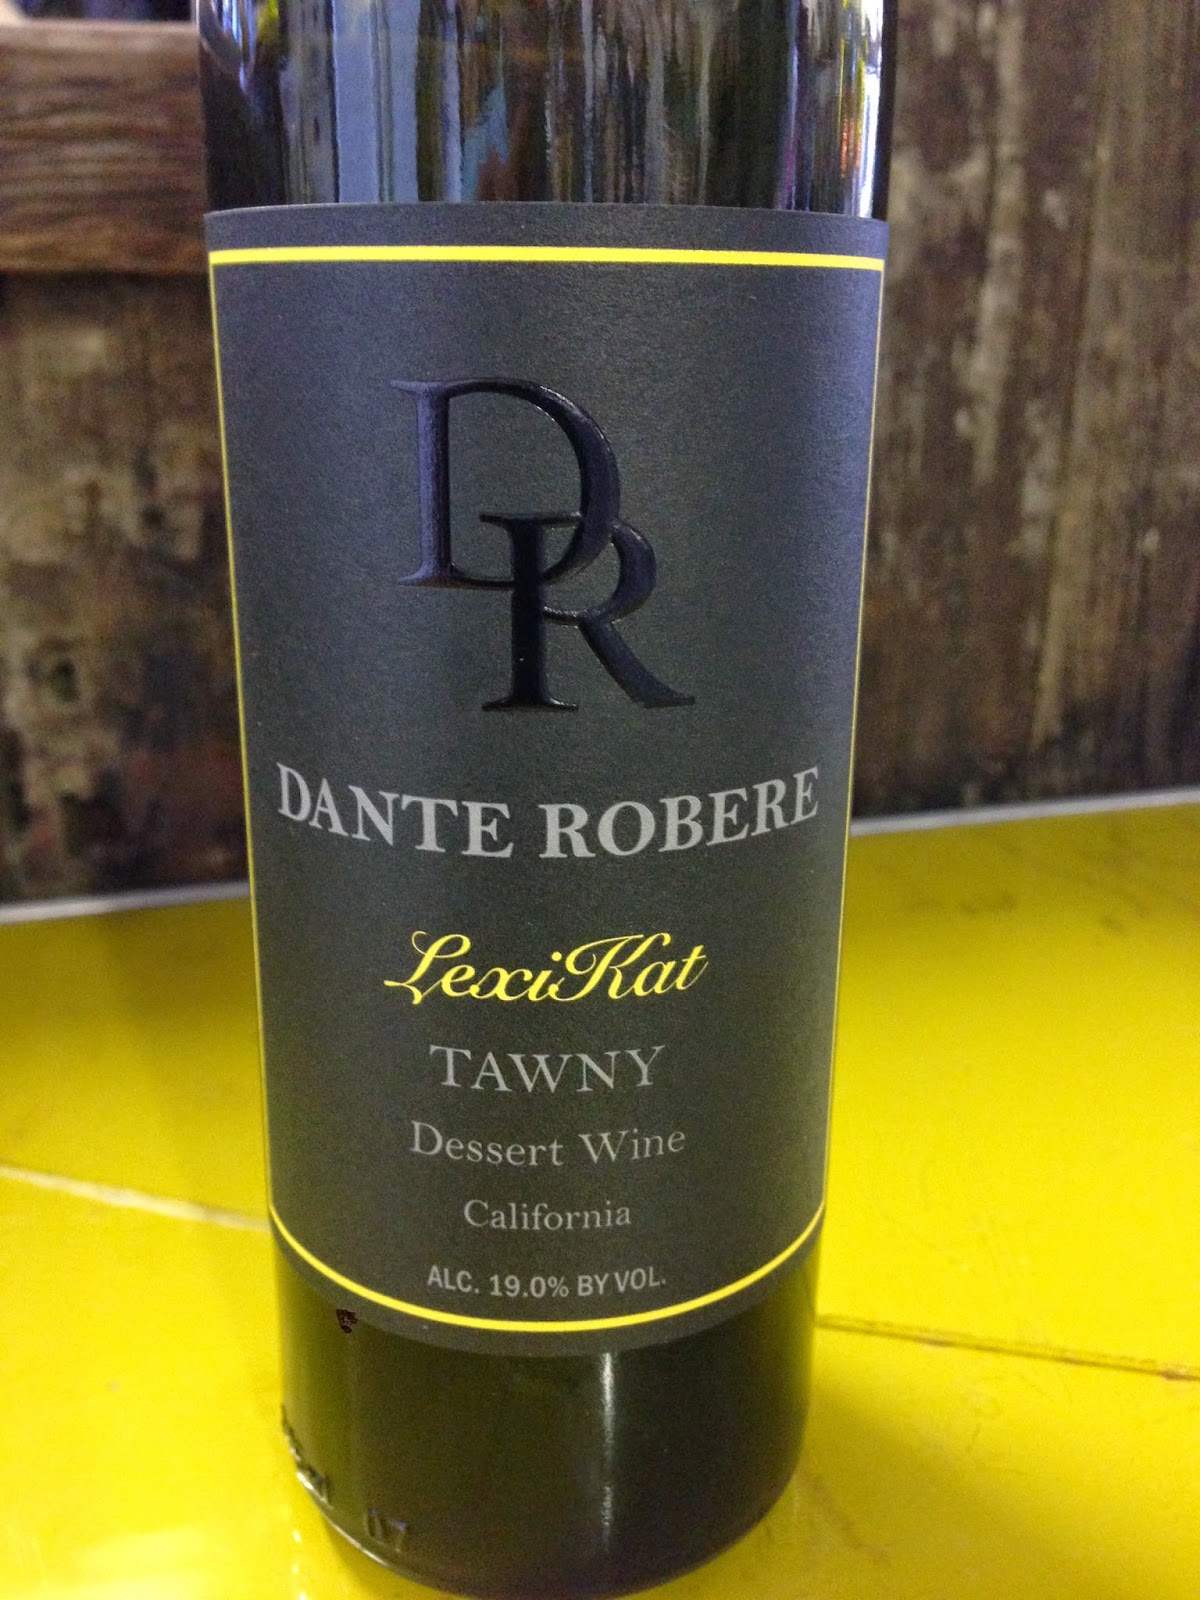 Dante Robere Vineyards: An Update